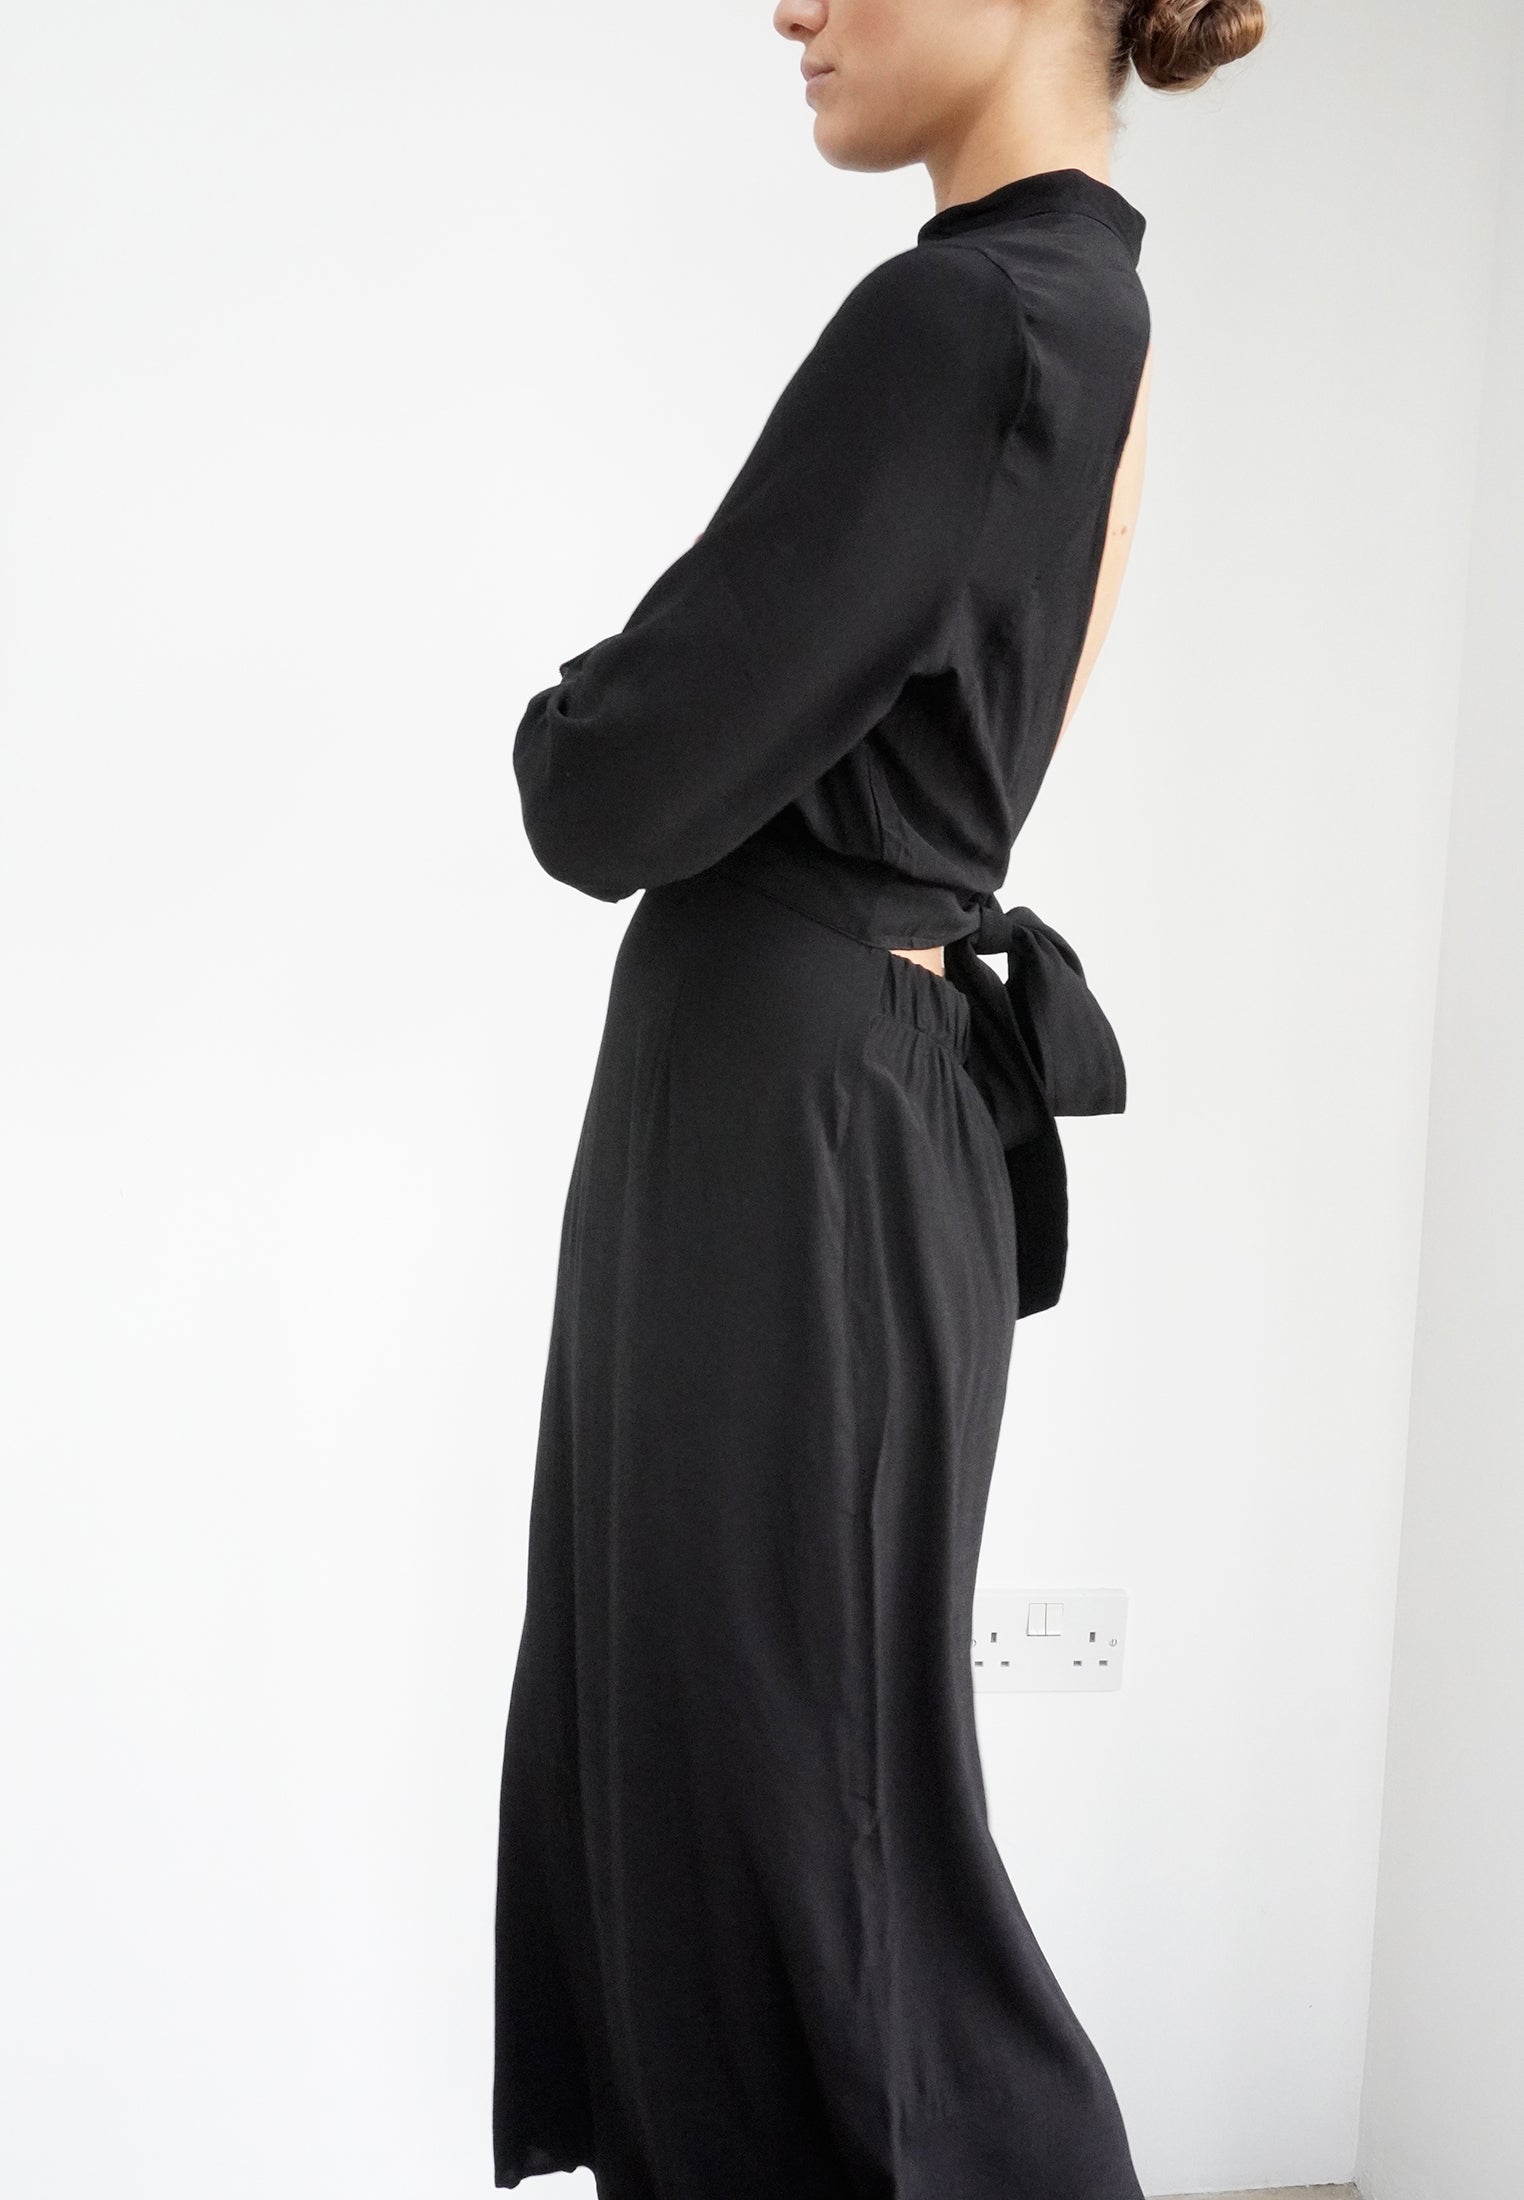 RELIGION Centre Backless Black Midi Dress